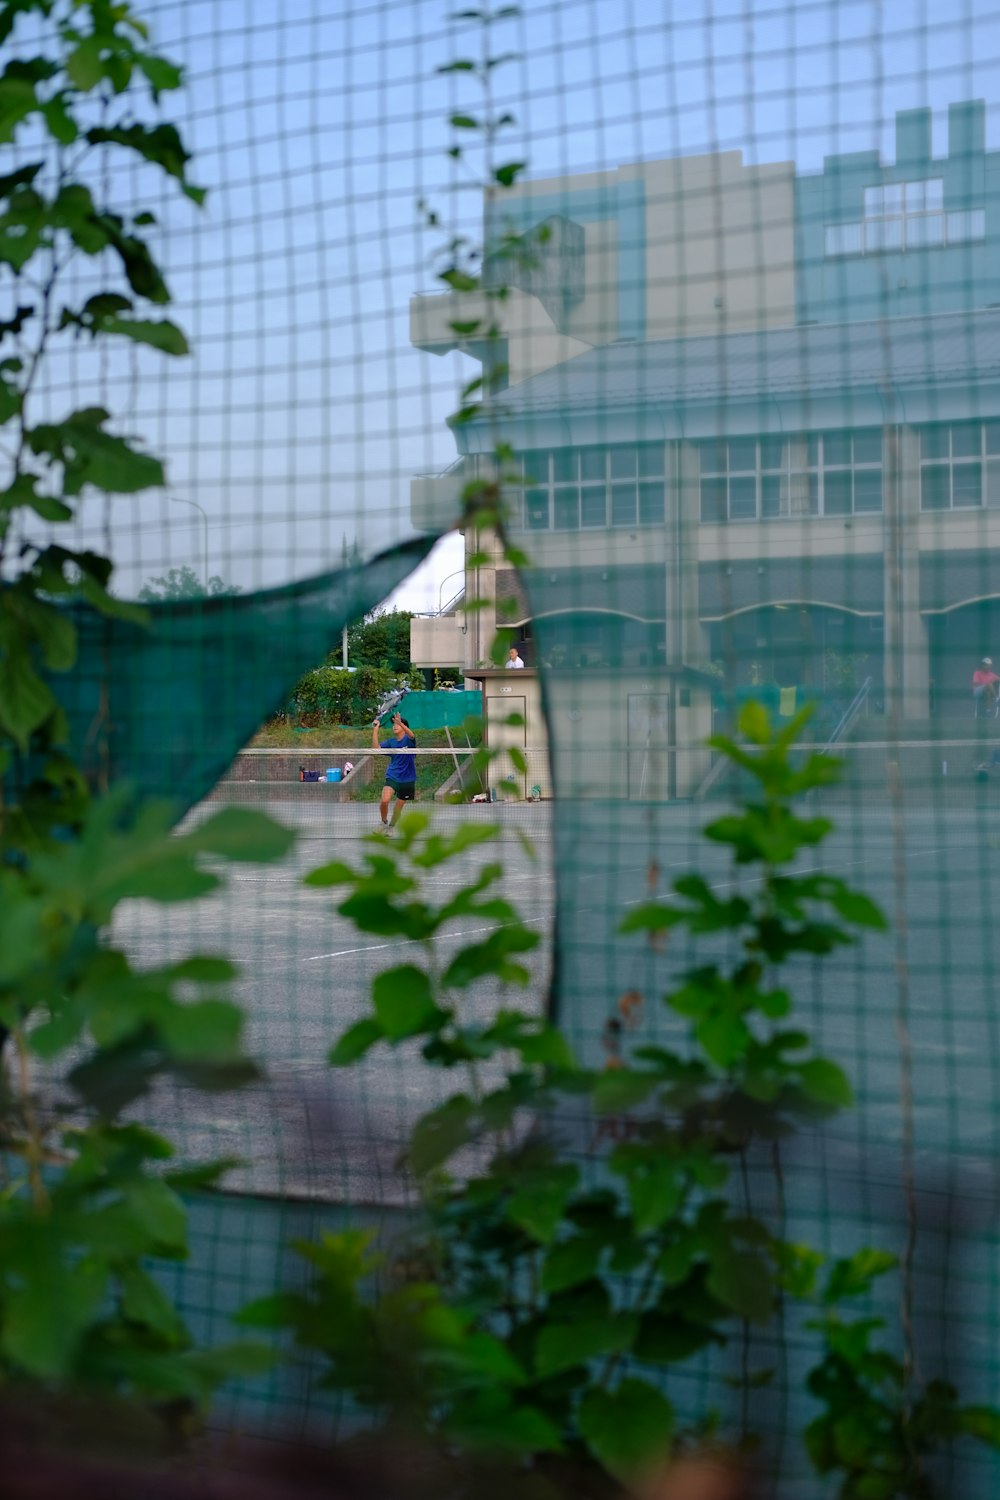 a view of a tennis court through a mesh fence